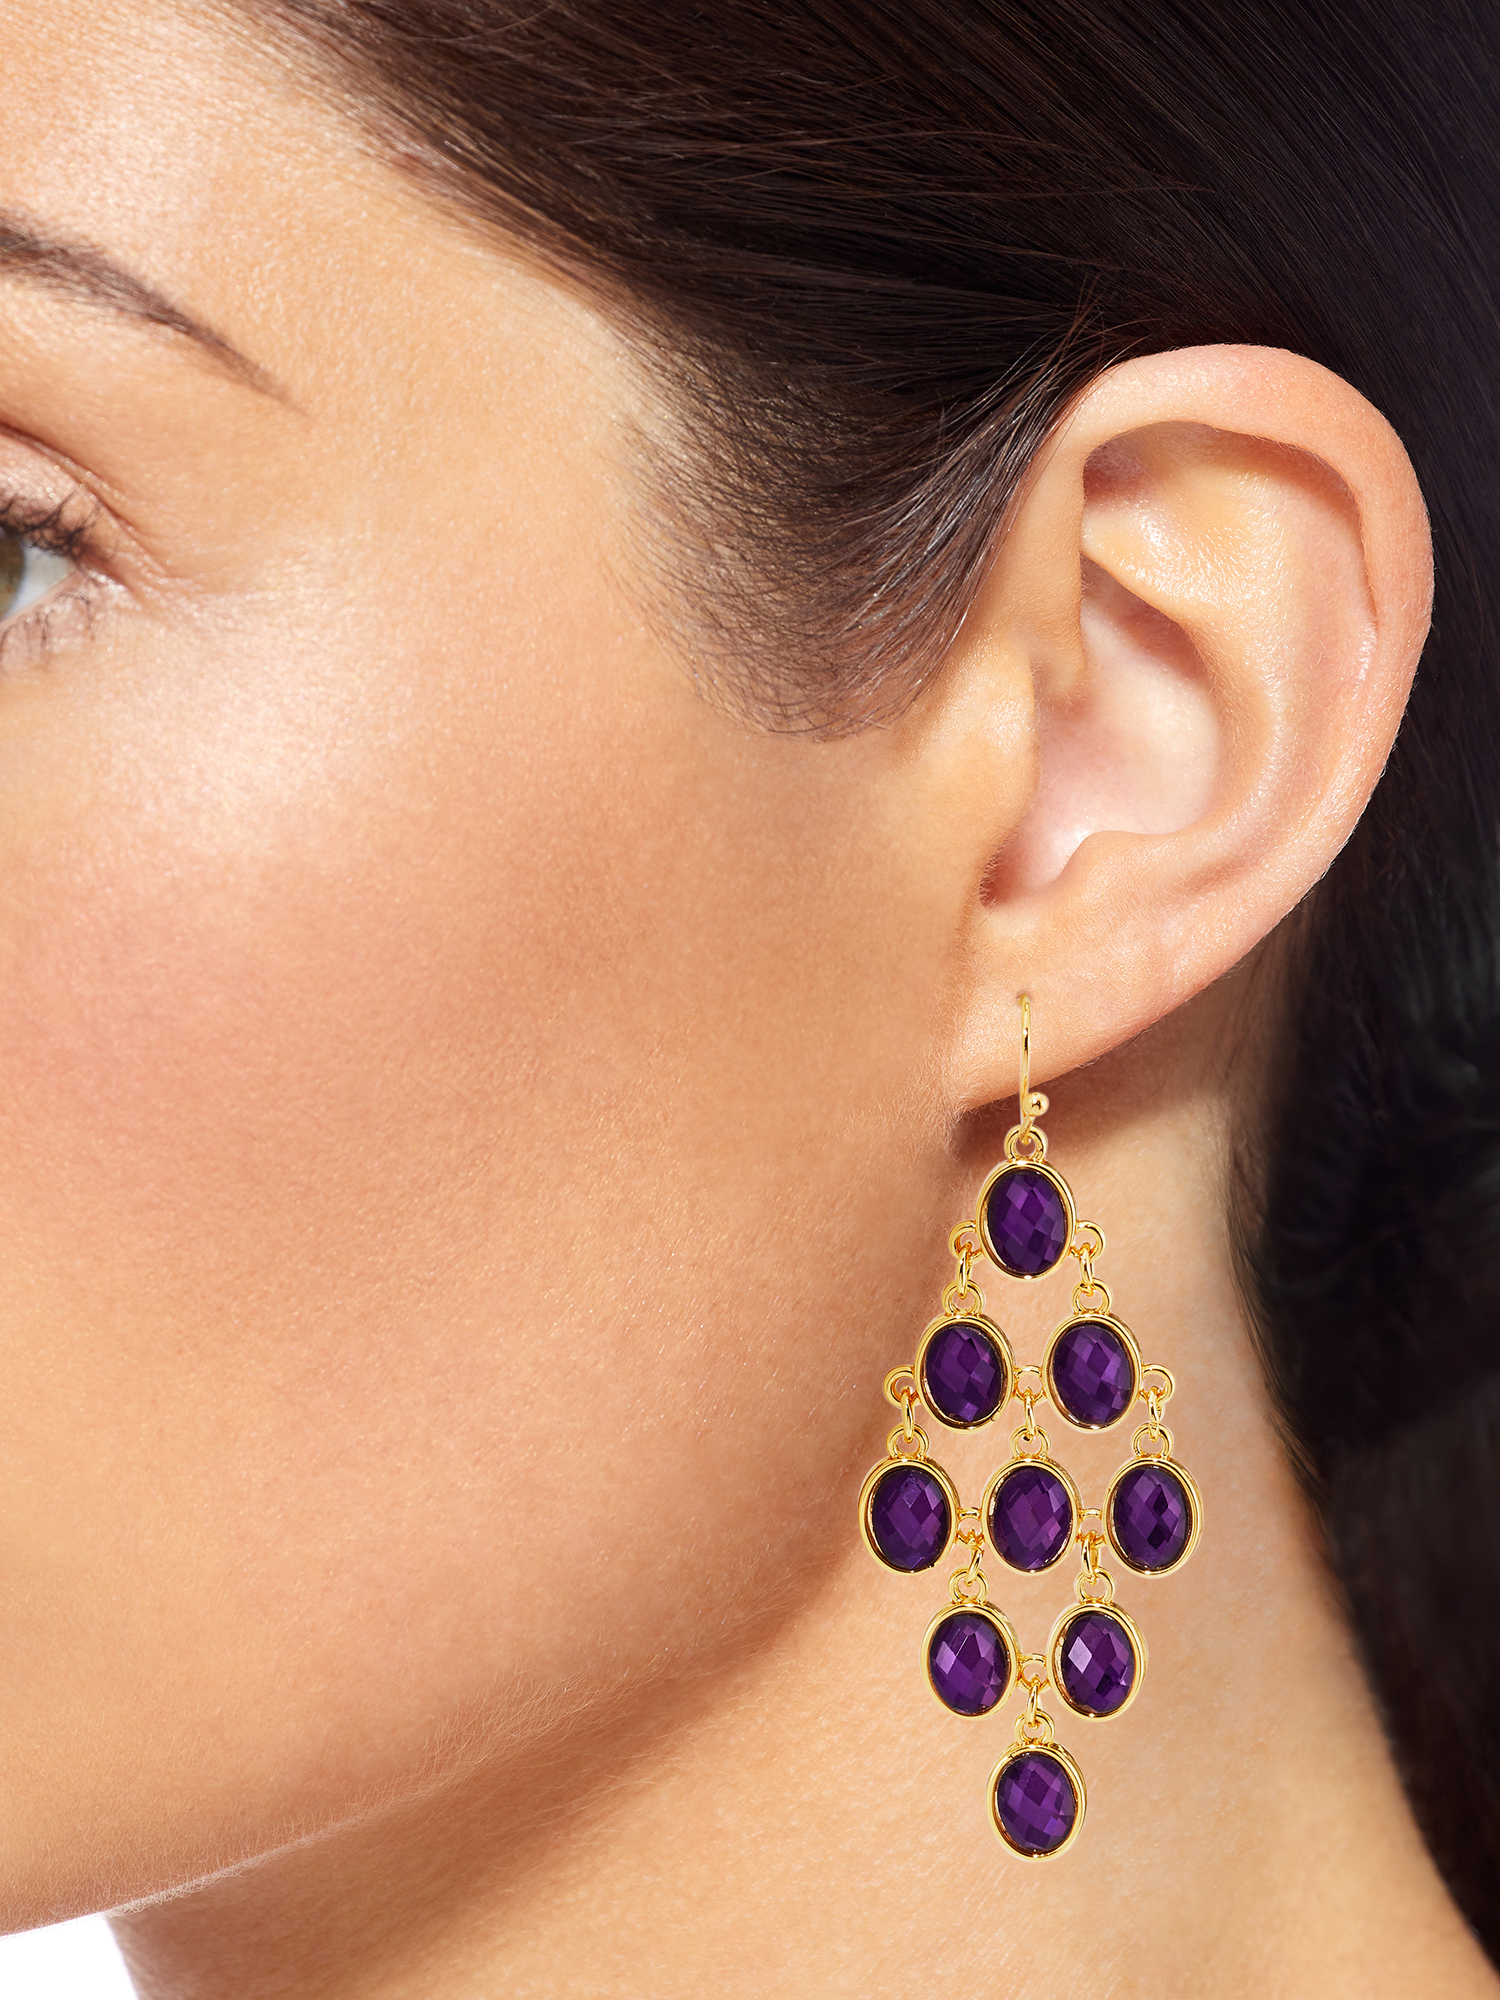 Scoop Womens Brass Yellow Gold-Plated Purple Stone Chandelier Dangle Earrings - image 2 of 3